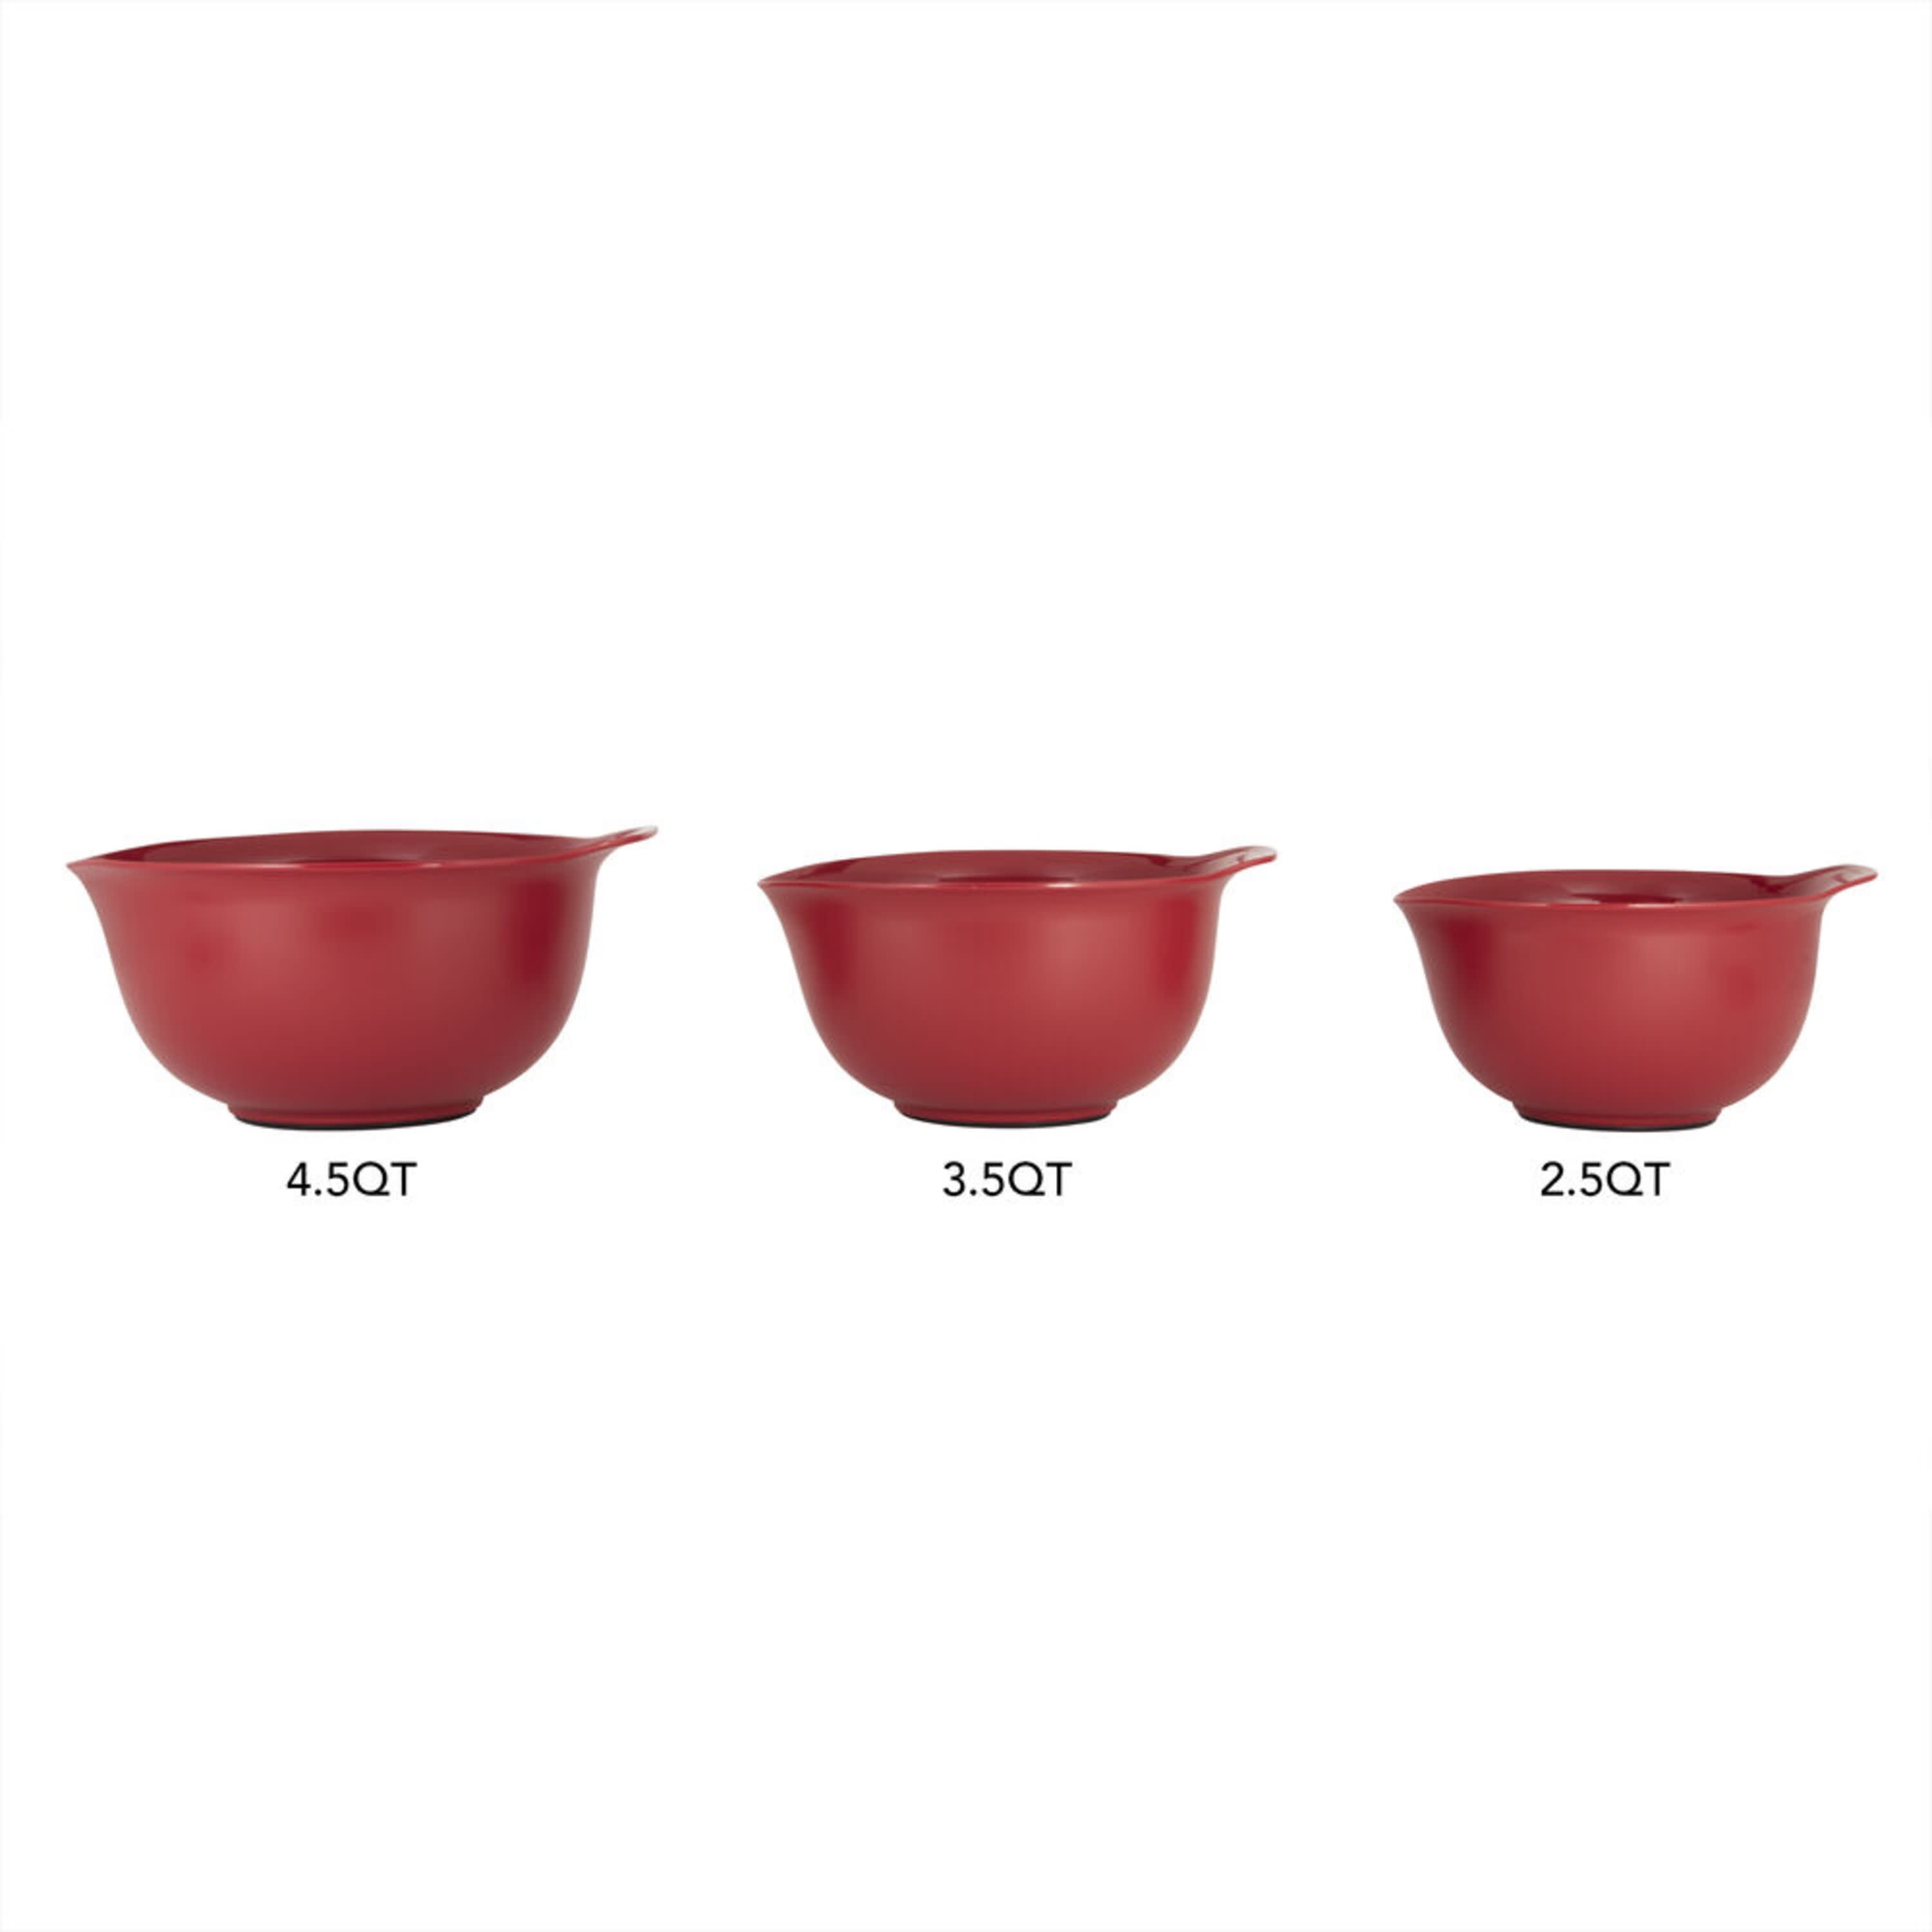  KitchenAid Classic Mixing Bowls, Set of 5, Aqua Sky 2 & Gourmet  Utility Whisk, 10.5-Inch, Matte Aqua Sky : Clothing, Shoes & Jewelry